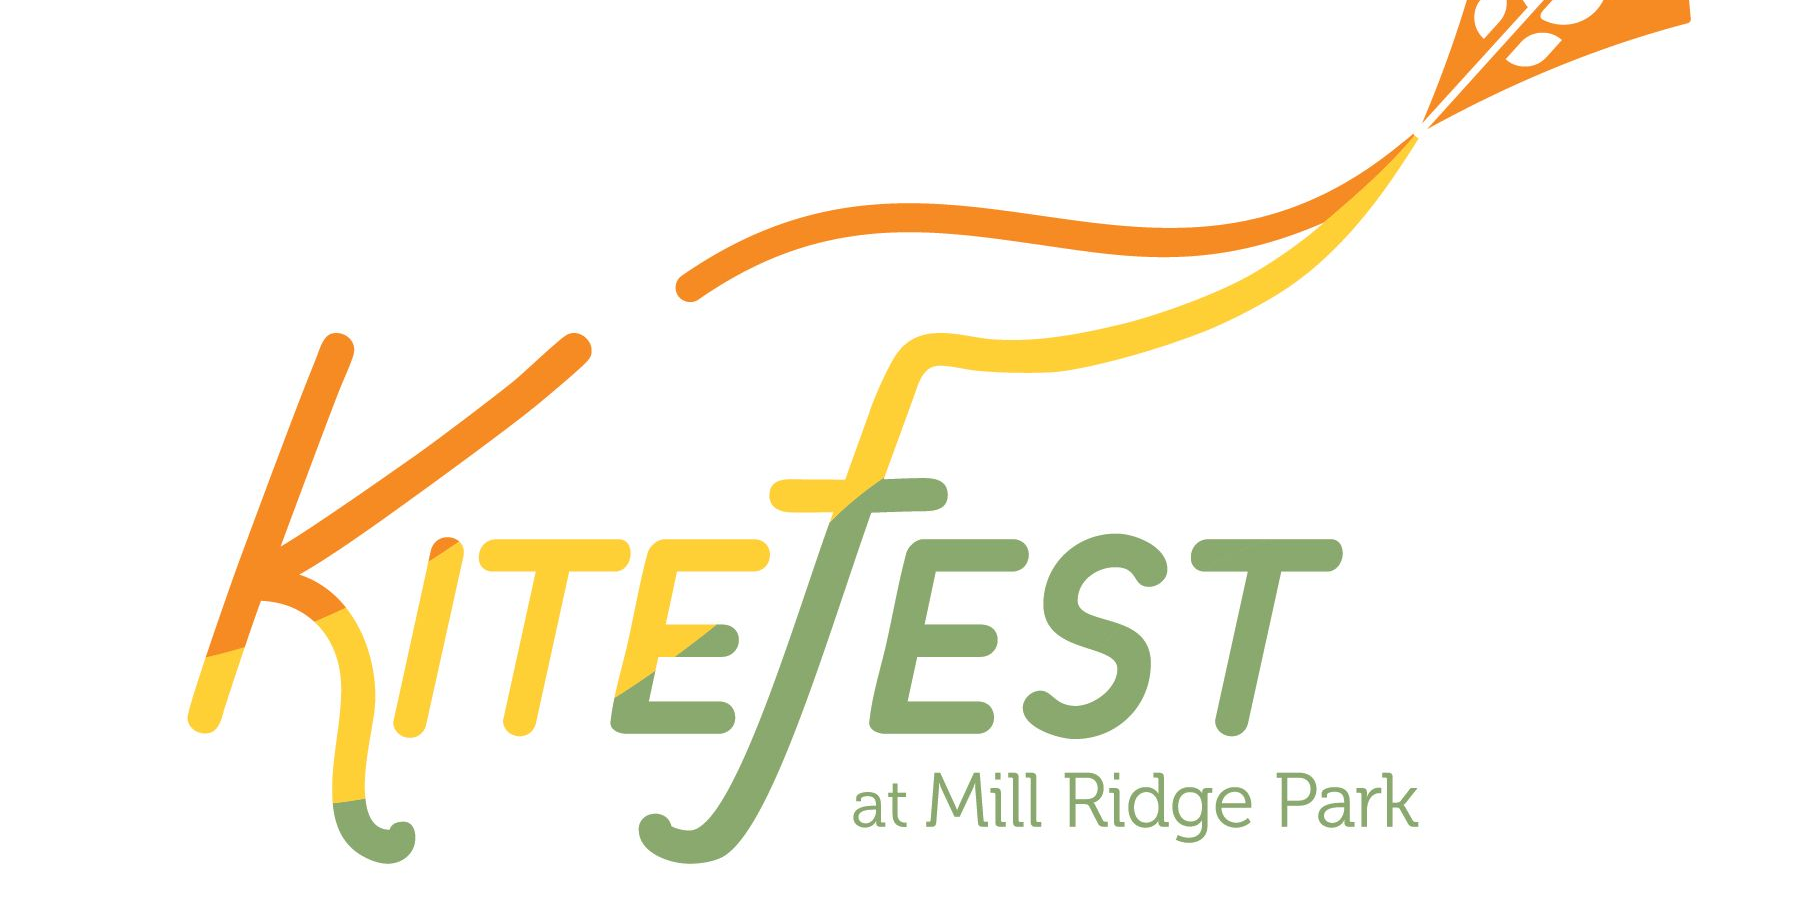 Kite Fest at Mill Ridge Park promotional image